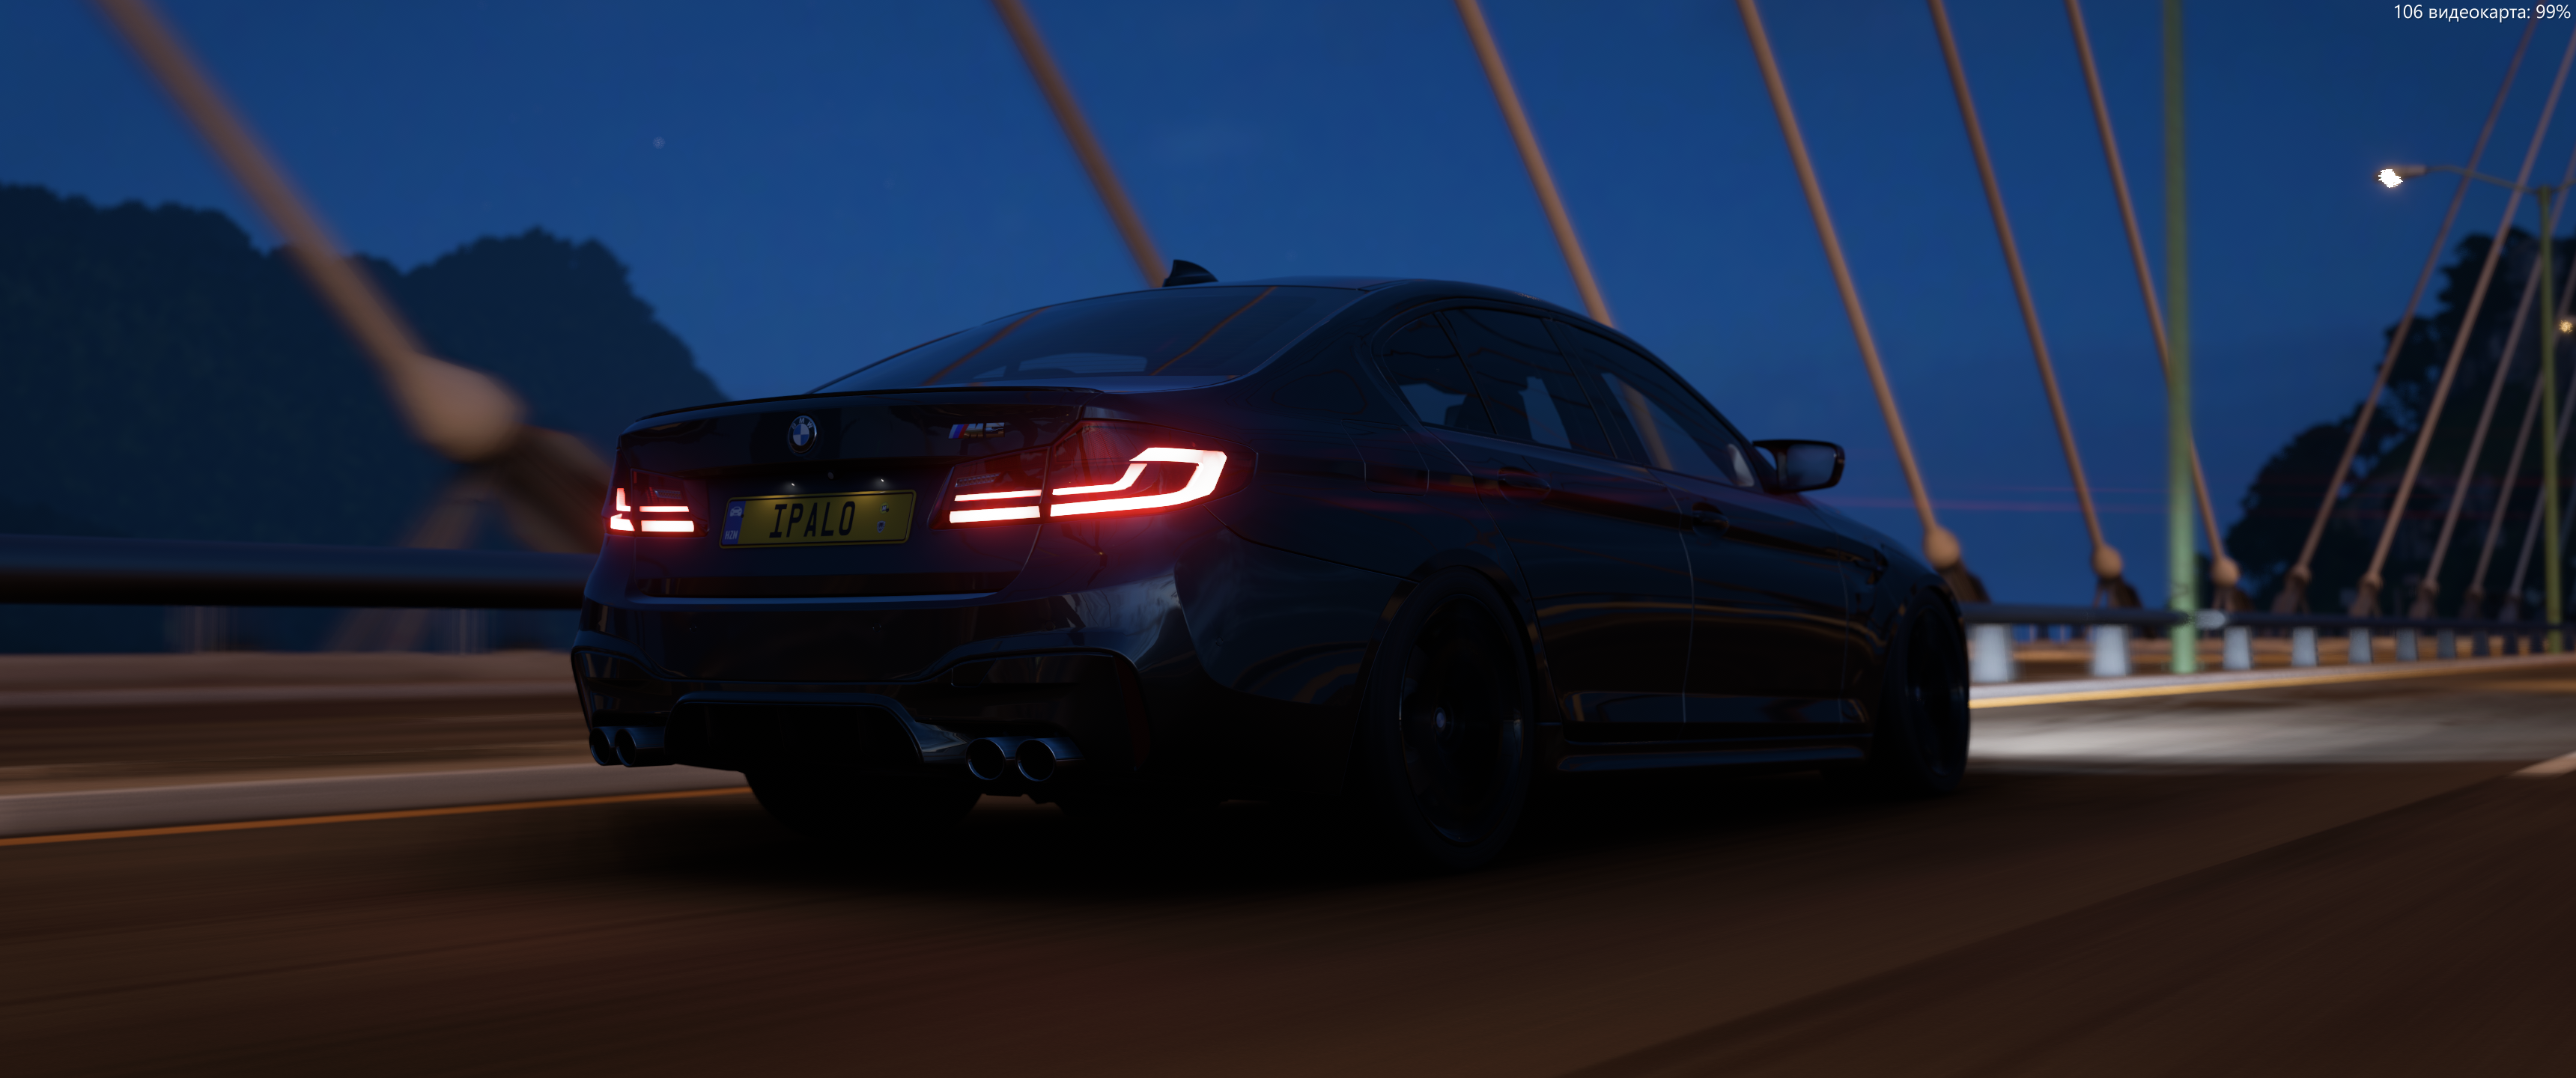 Forza Forza Horizon 5 Ultrawide Car Racing Video Games BMW M5 2018 BMW 3440x1440